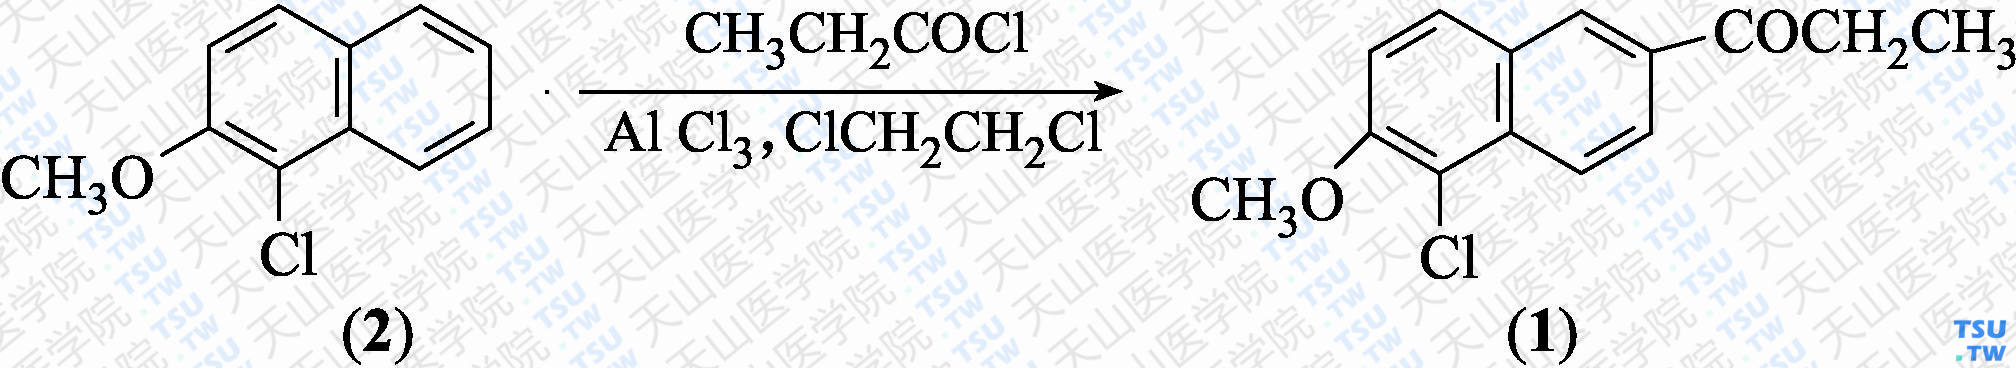 1-（5-氯-6-甲氧基-2-萘基）丙酮（分子式：C<sub>14</sub>H<sub>13</sub>ClO<sub>2</sub>）的合成方法路线及其结构式